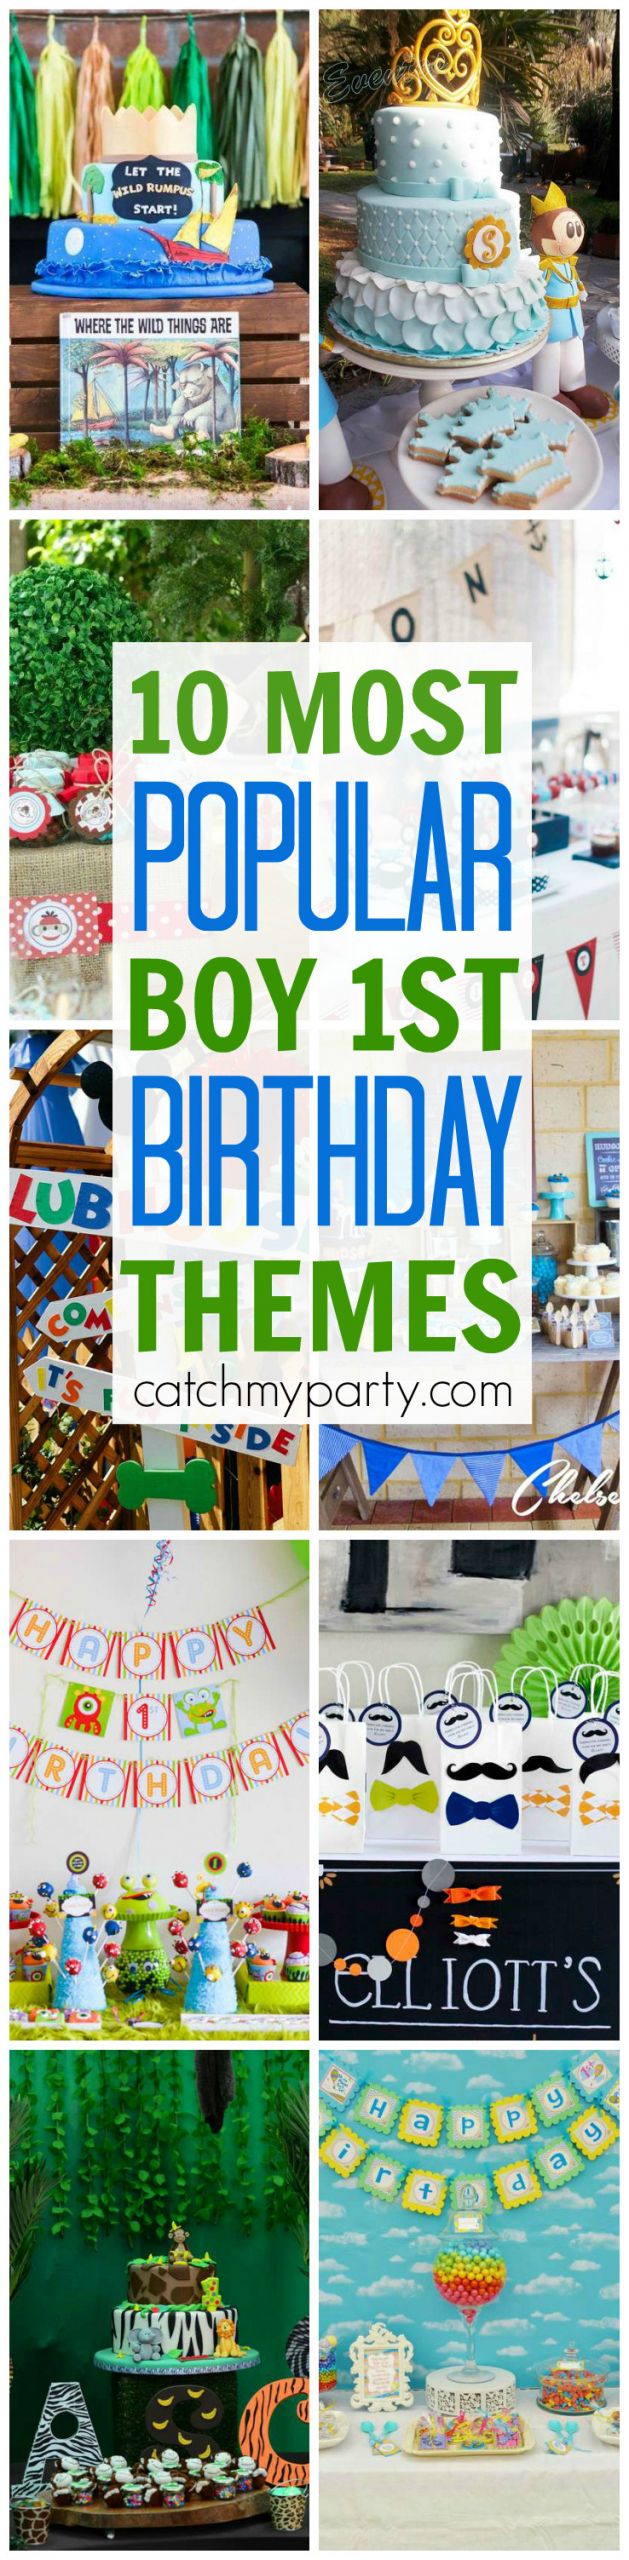 Boy First Birthday Party Ideas
 10 Most Popular Boy 1st Birthday Party Themes